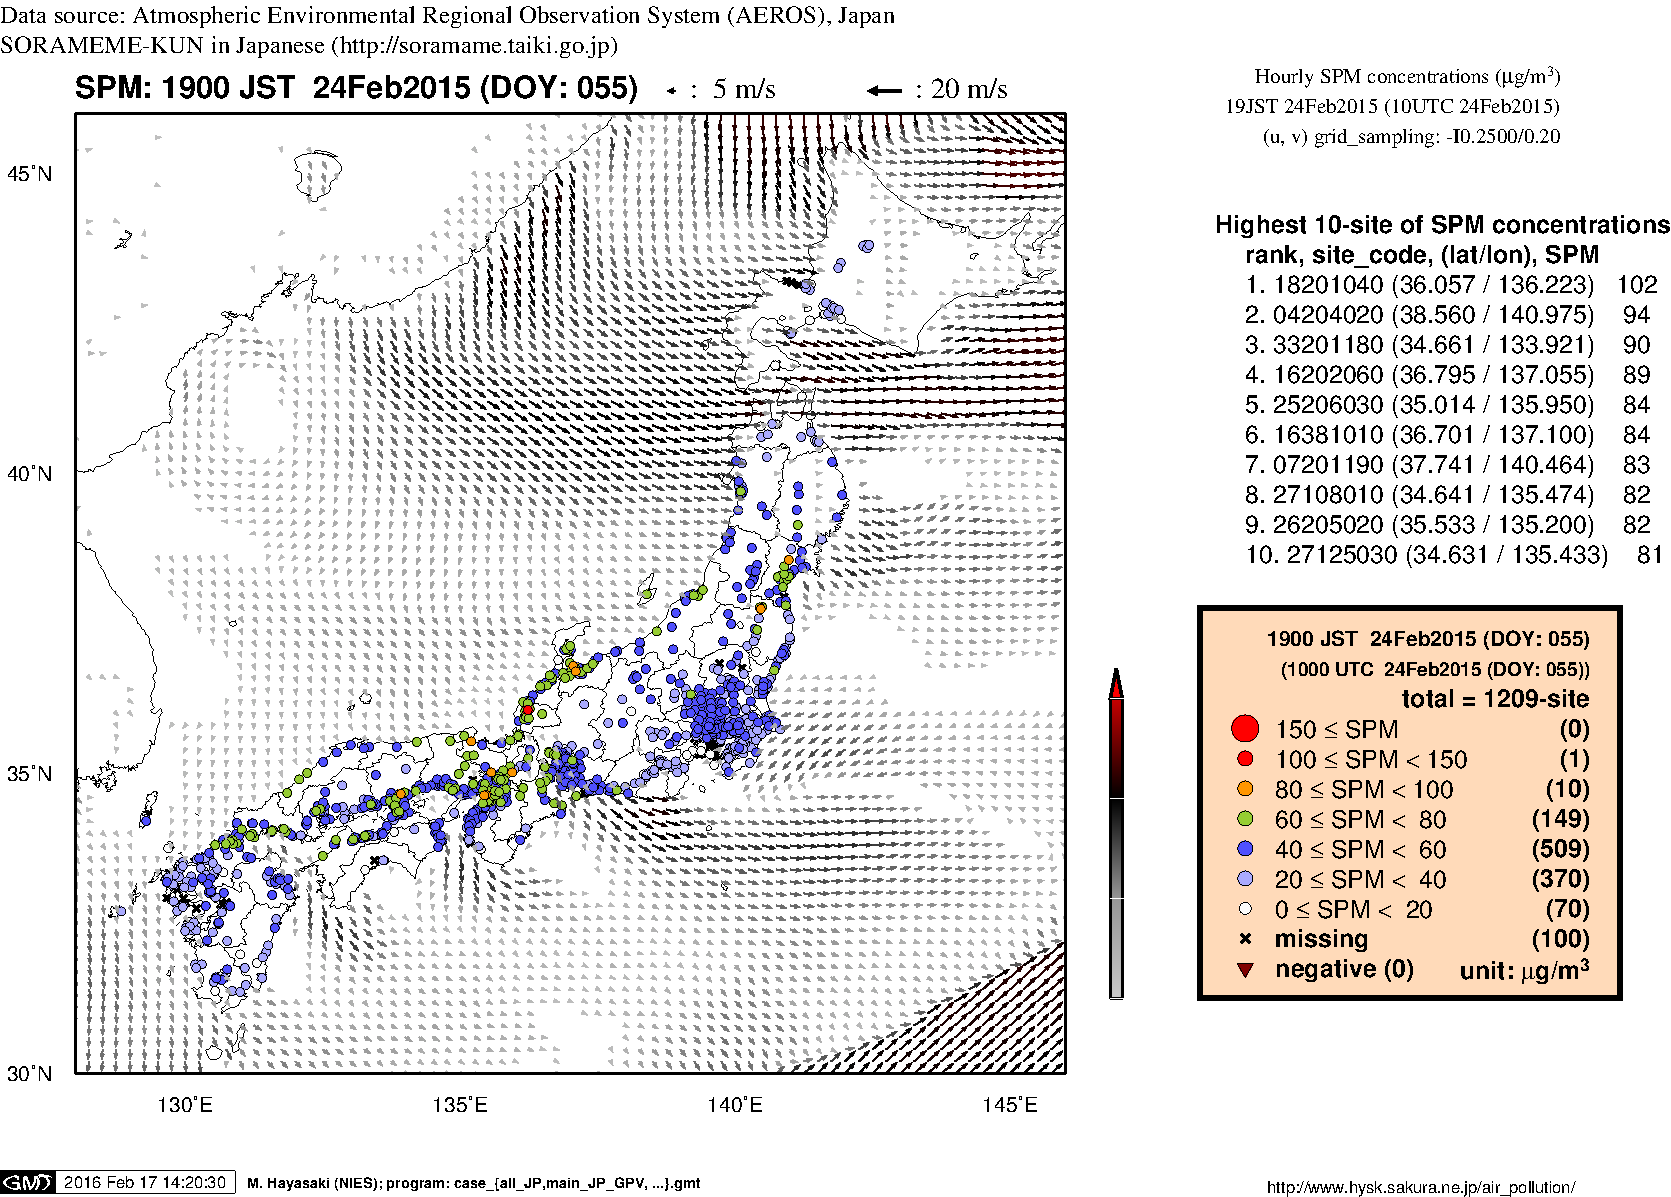 SPM concentration in mainland Japan (19JST 24Feb2015)